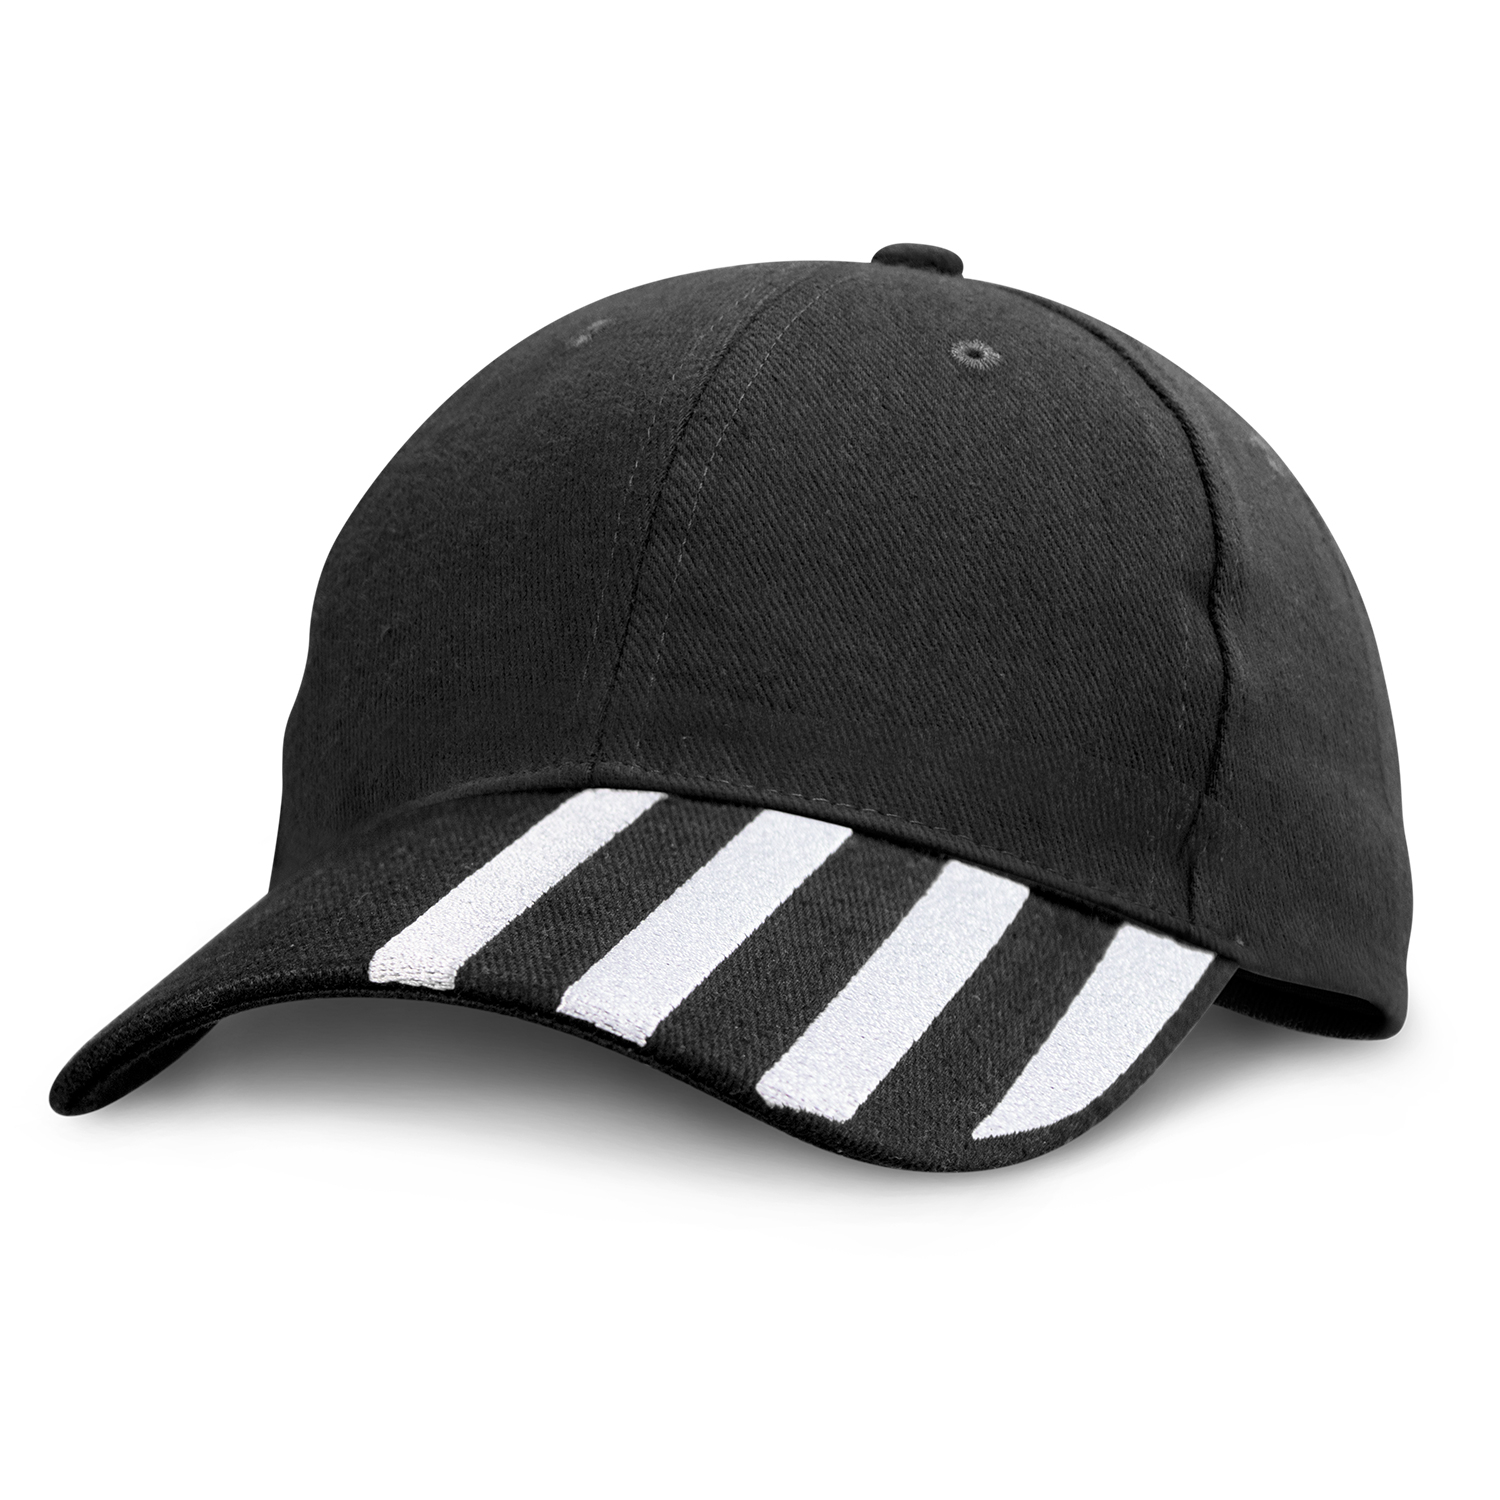 Summer Linear Cap cap